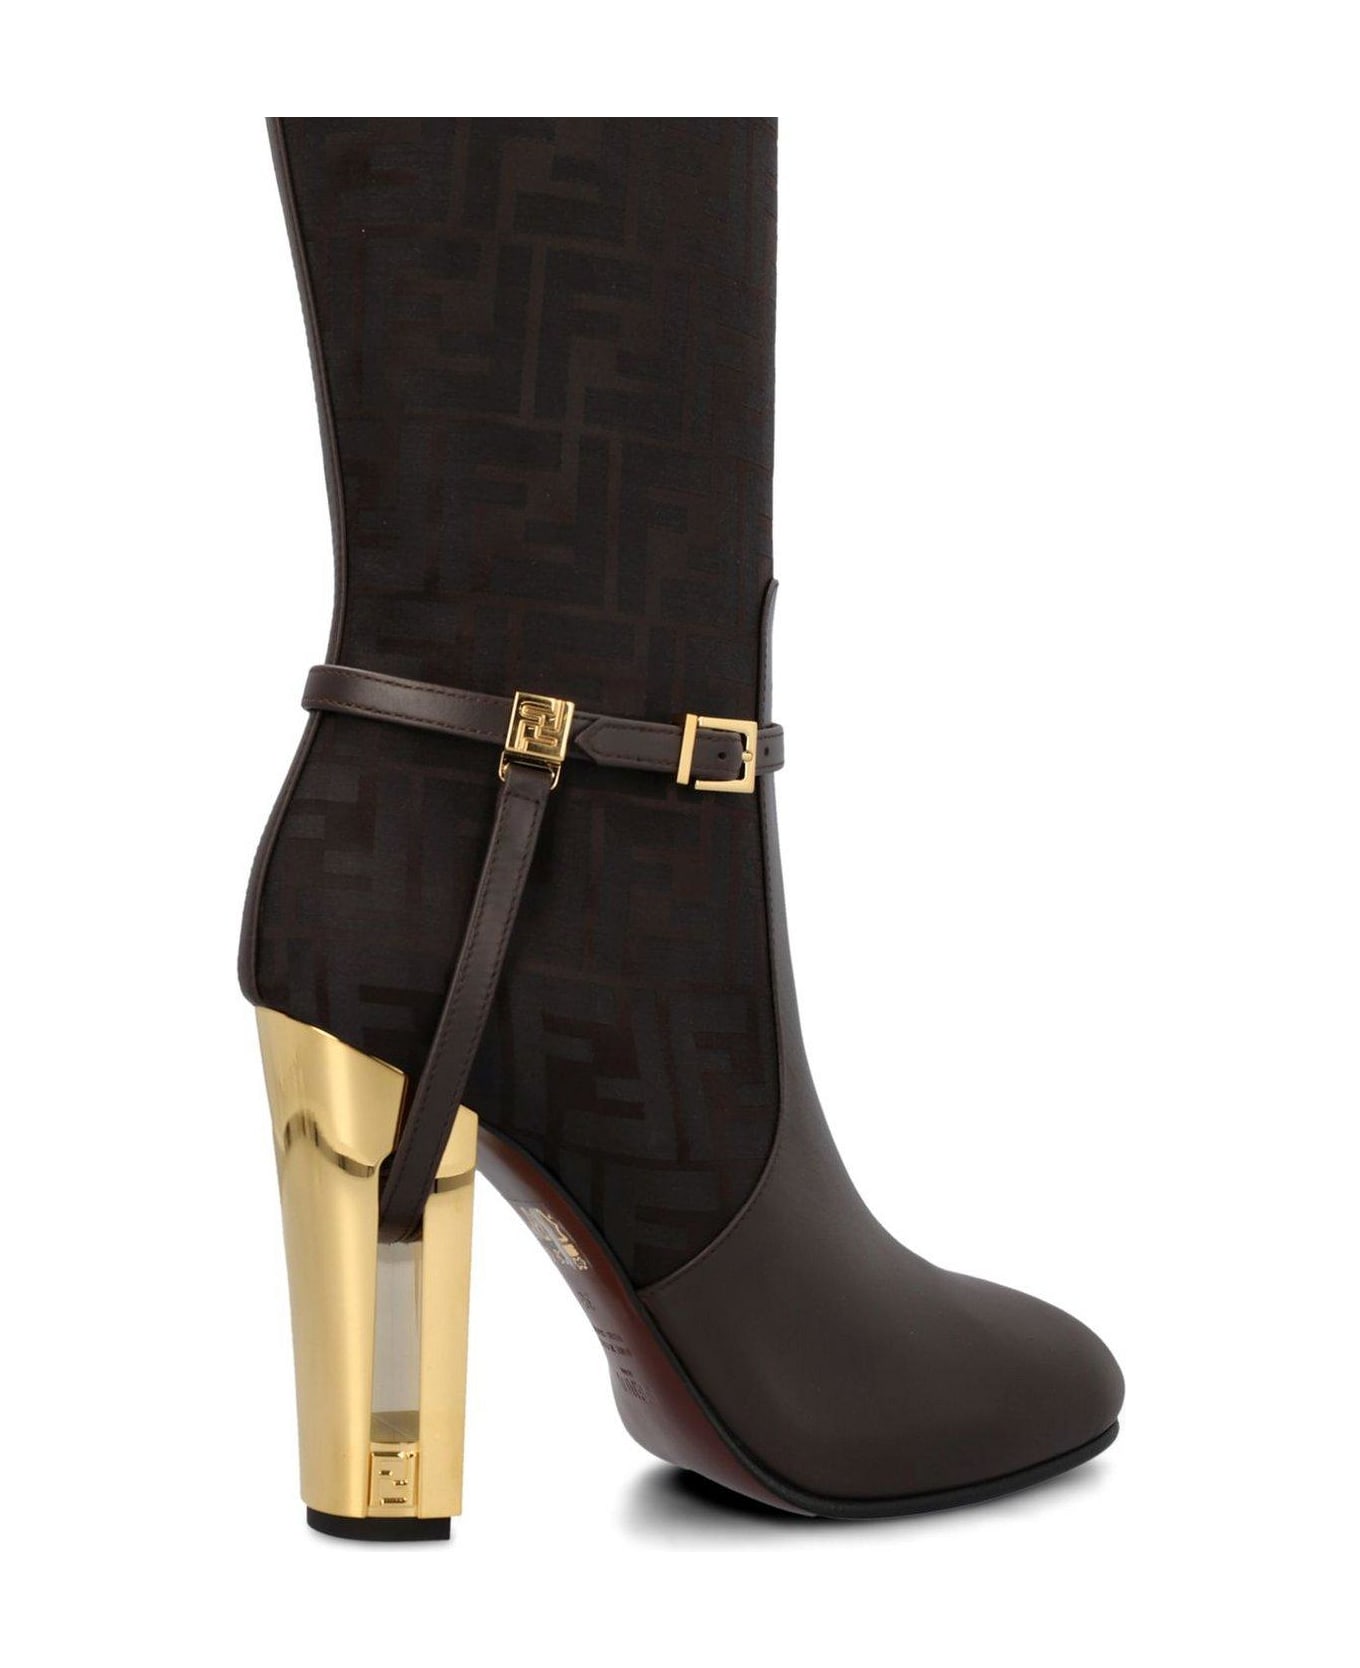 Fendi Delfina High Heeled Boots - Brown